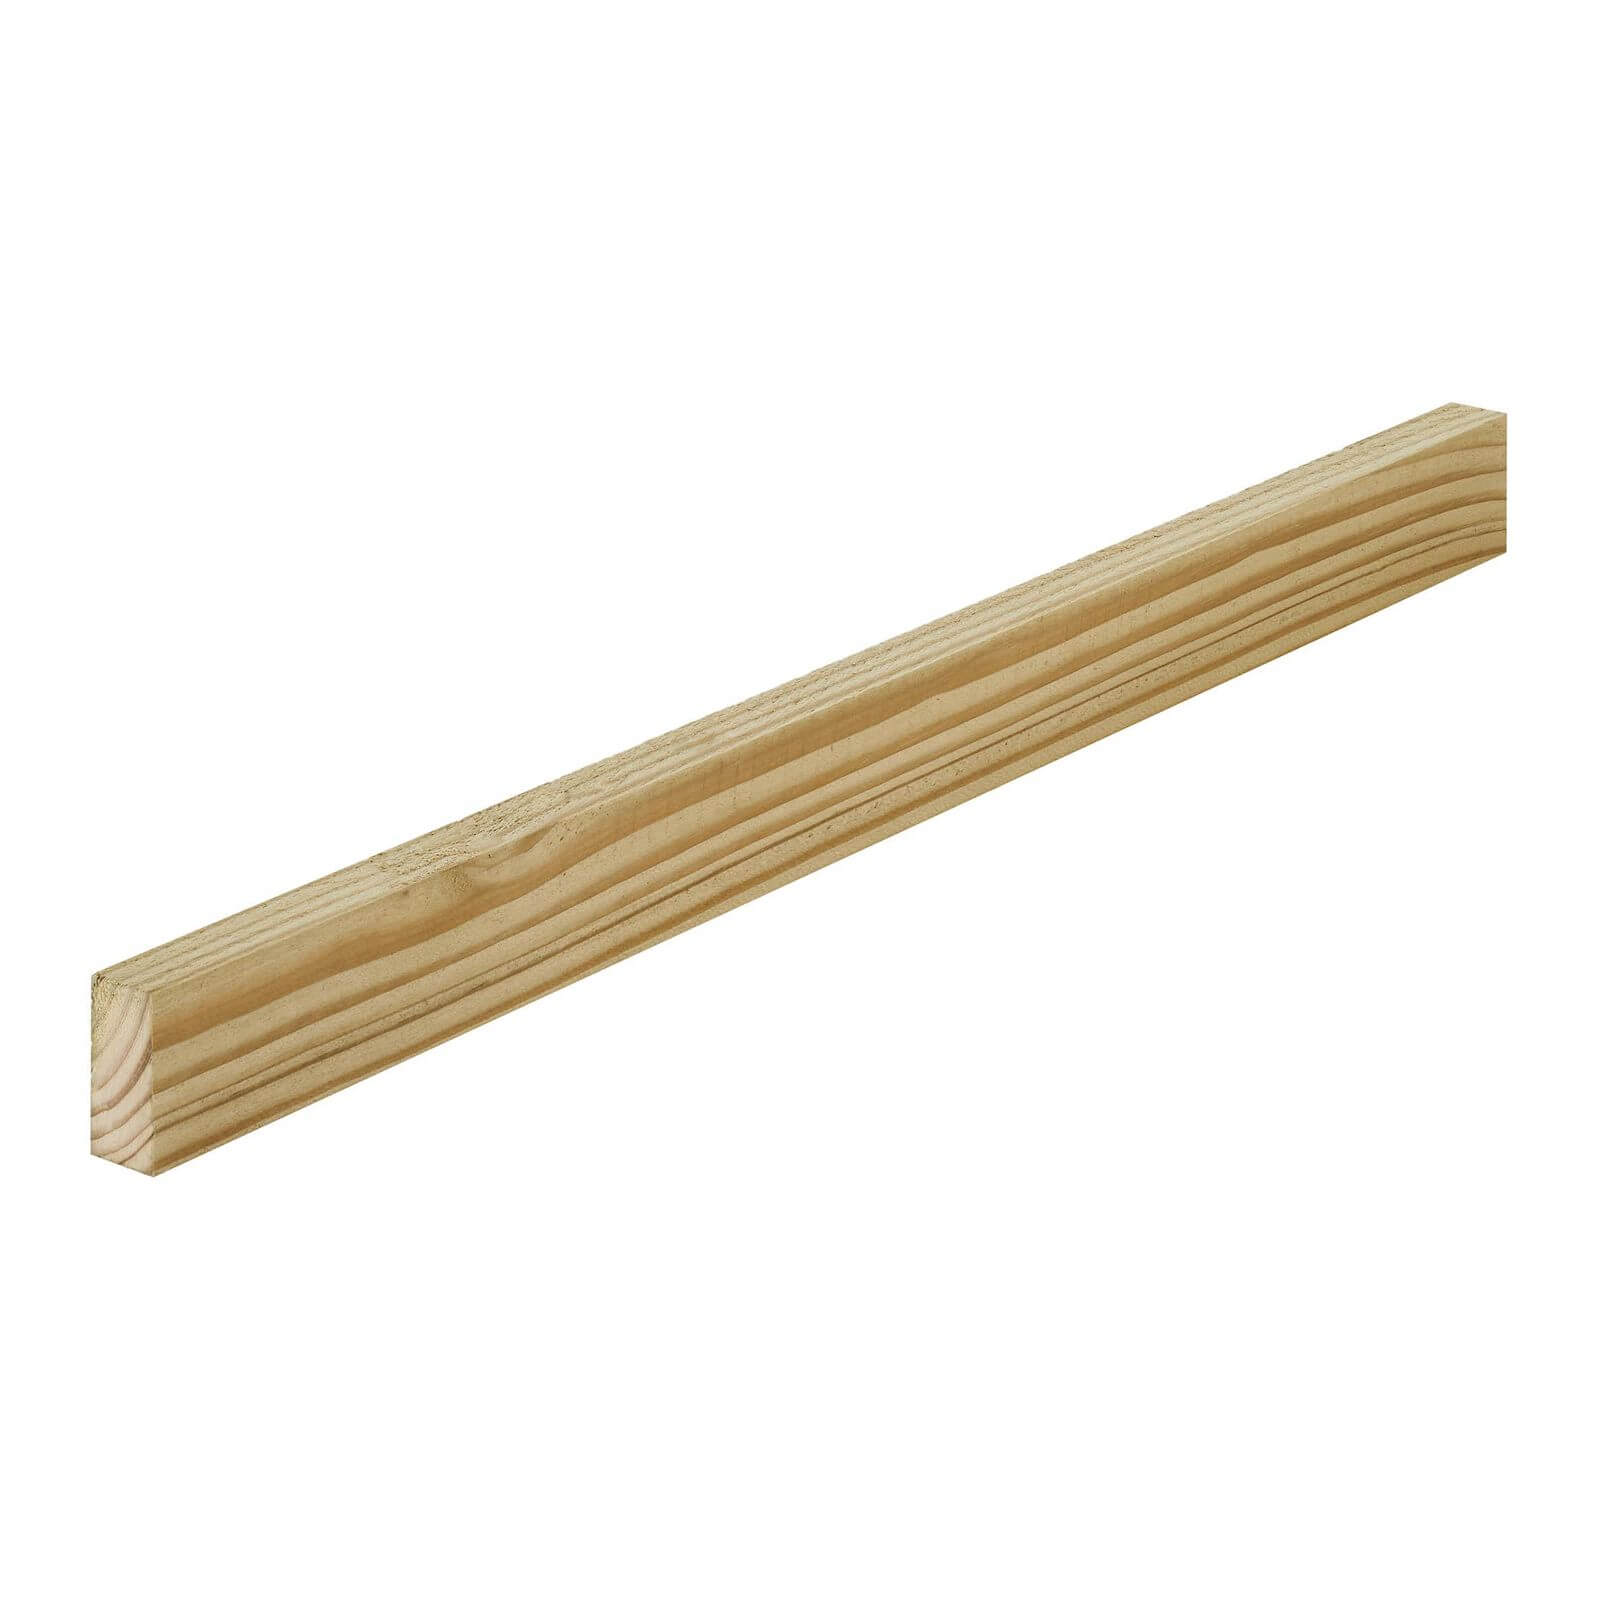 Metsa Sawn Treated Stick Softwood Timber 2.4m (19mm x 38mm x 2400mm)